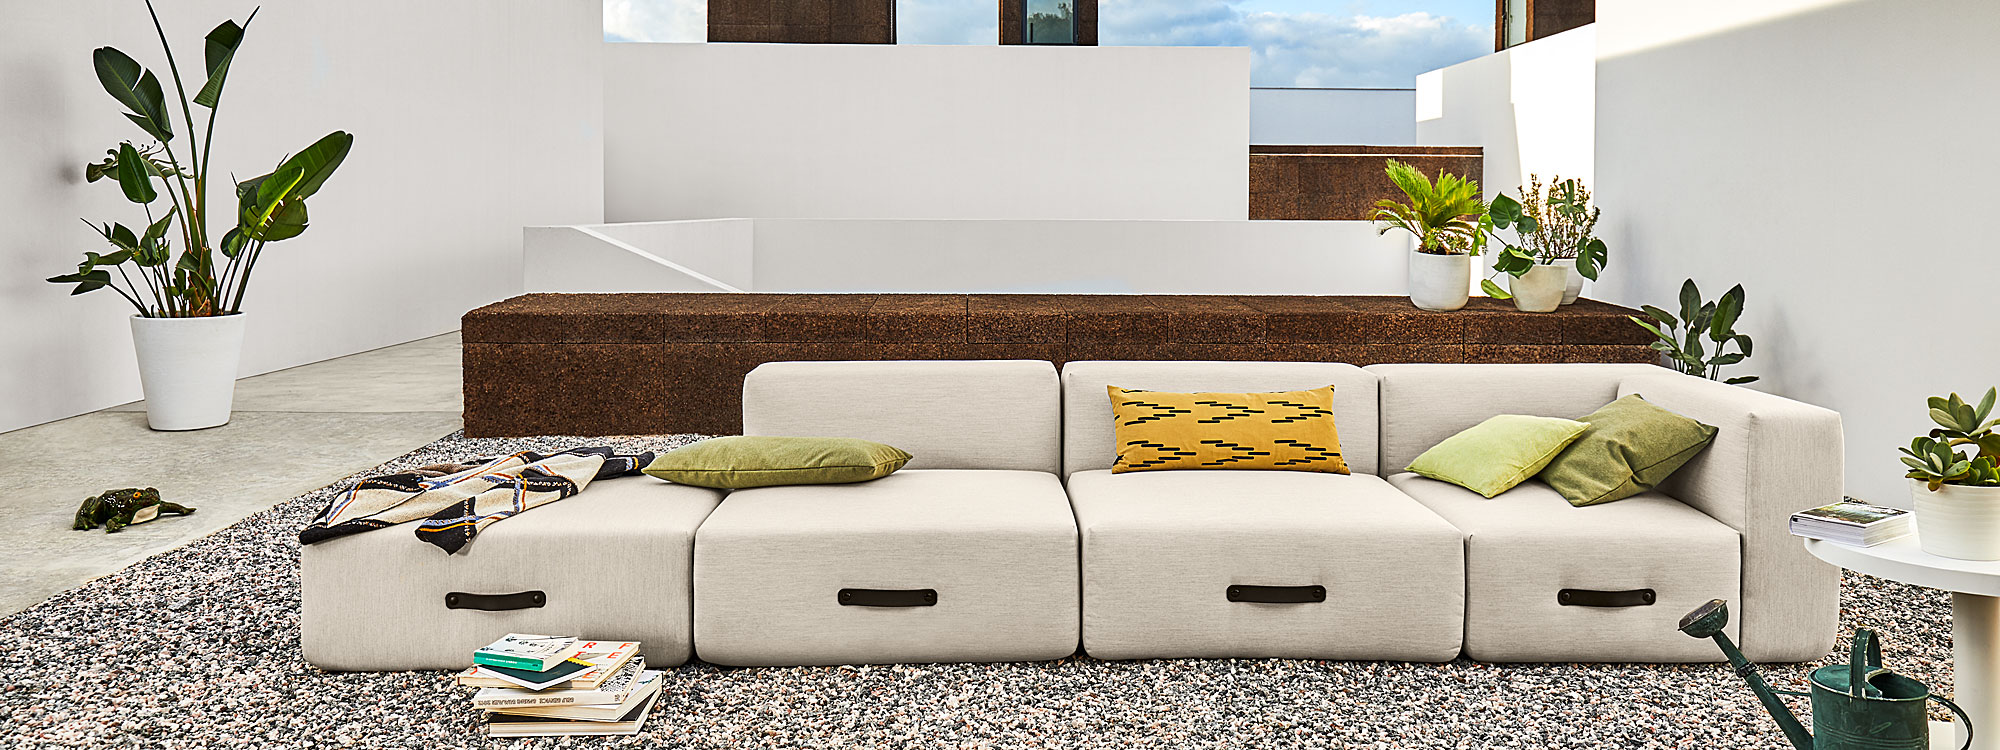 Grey Miami garden sofa designed by Mark Braun for Conmoto modern garden furniture company, Germany.